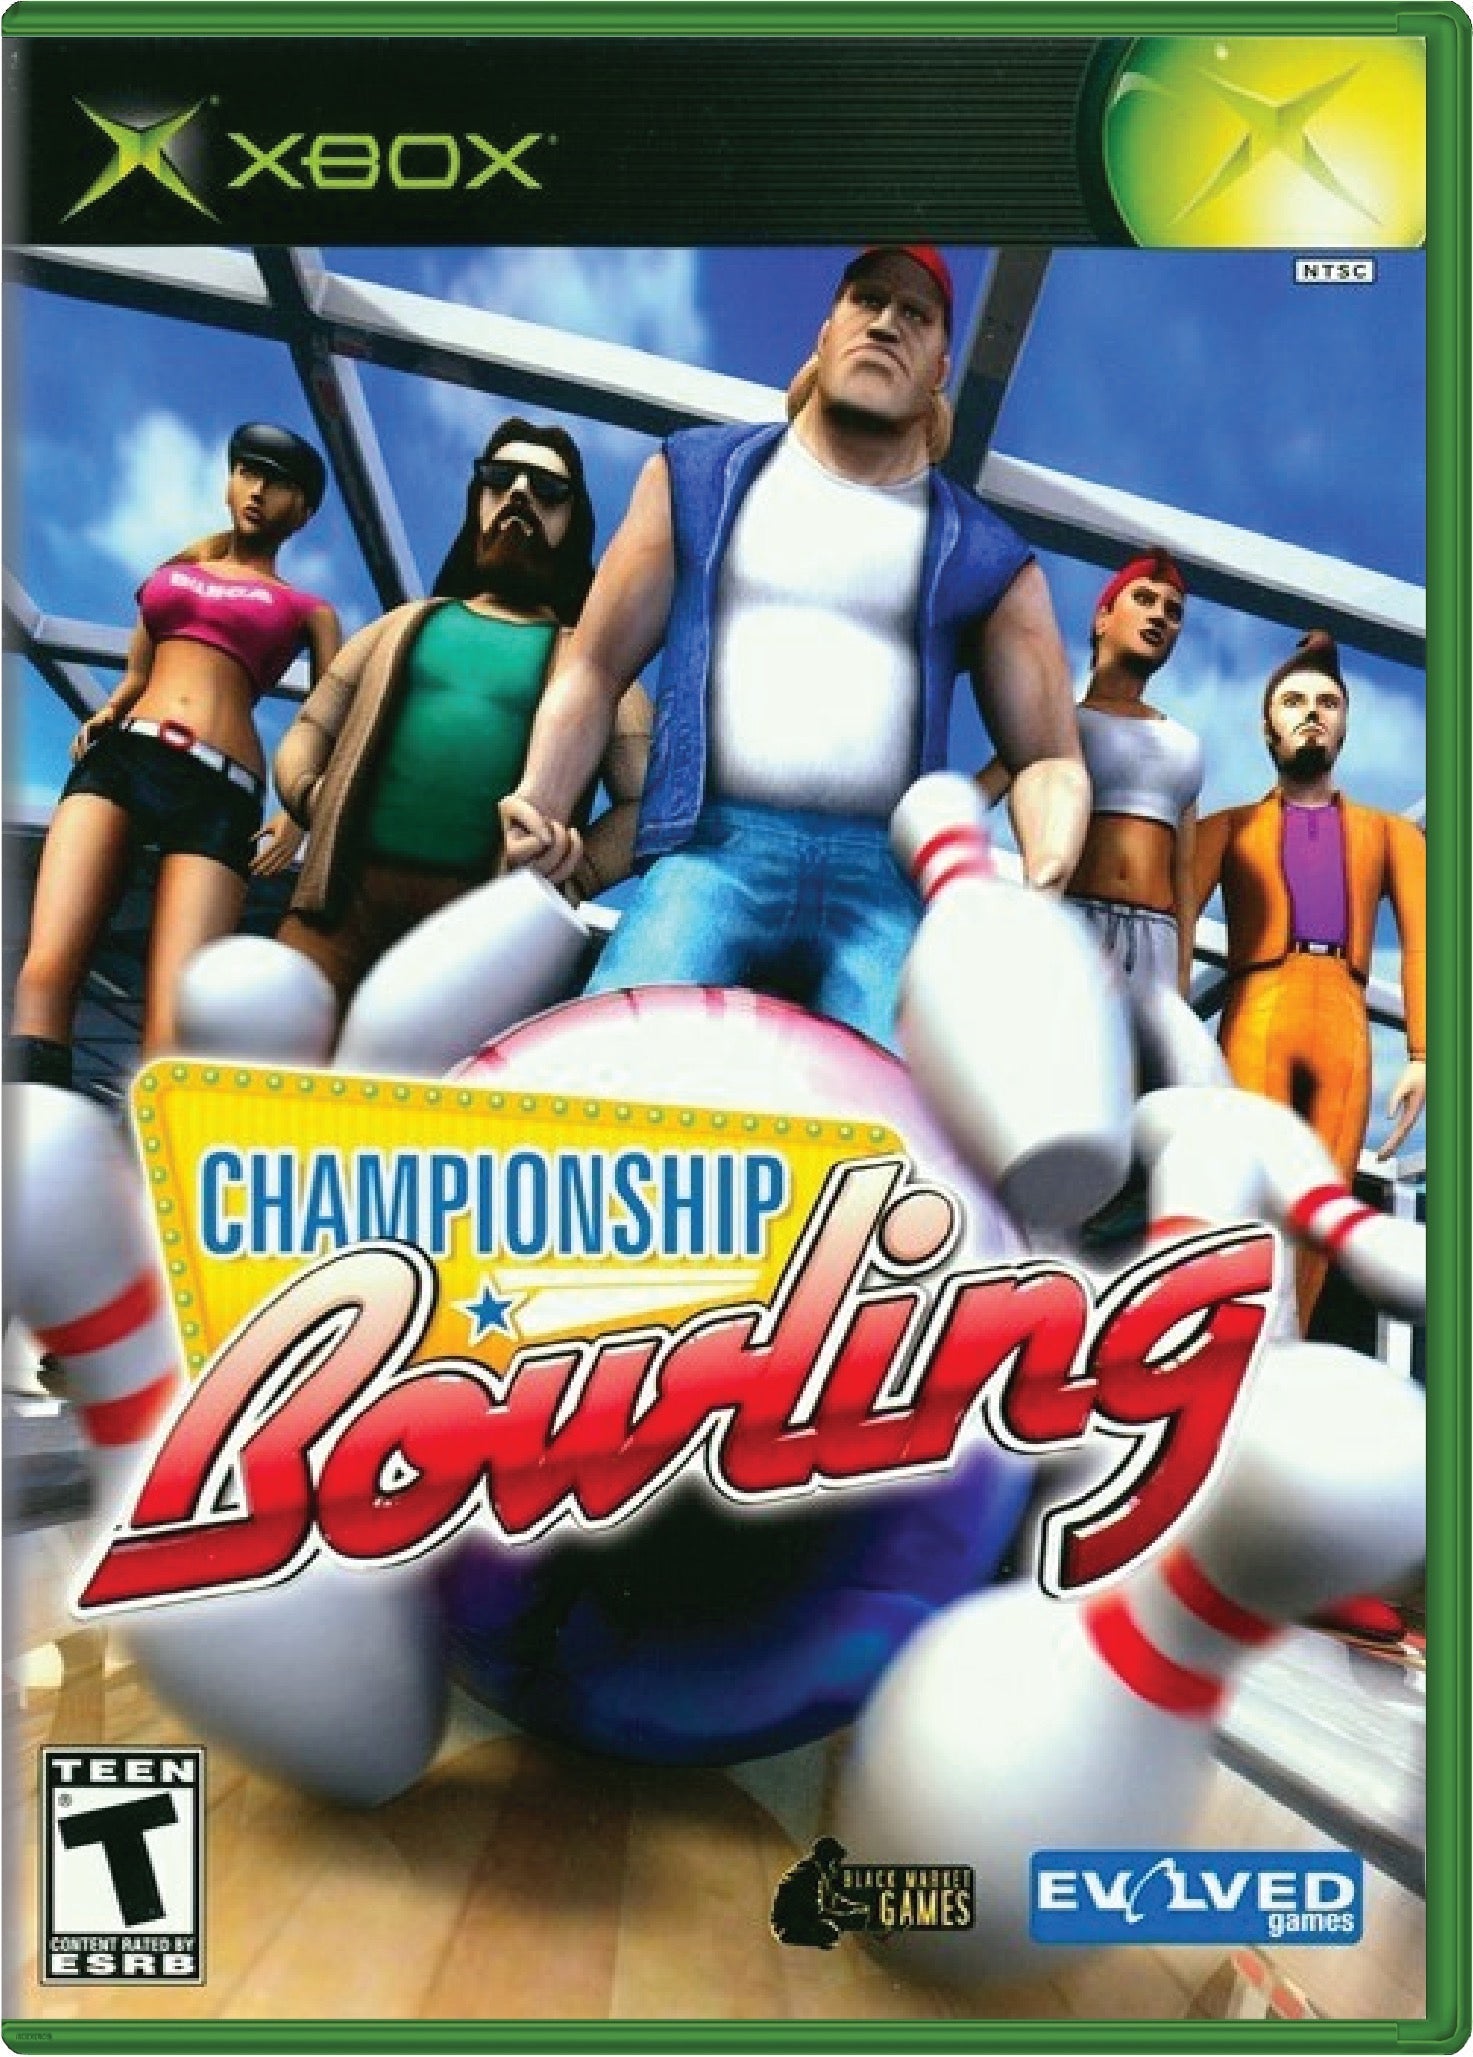 Championship Bowling Cover Art